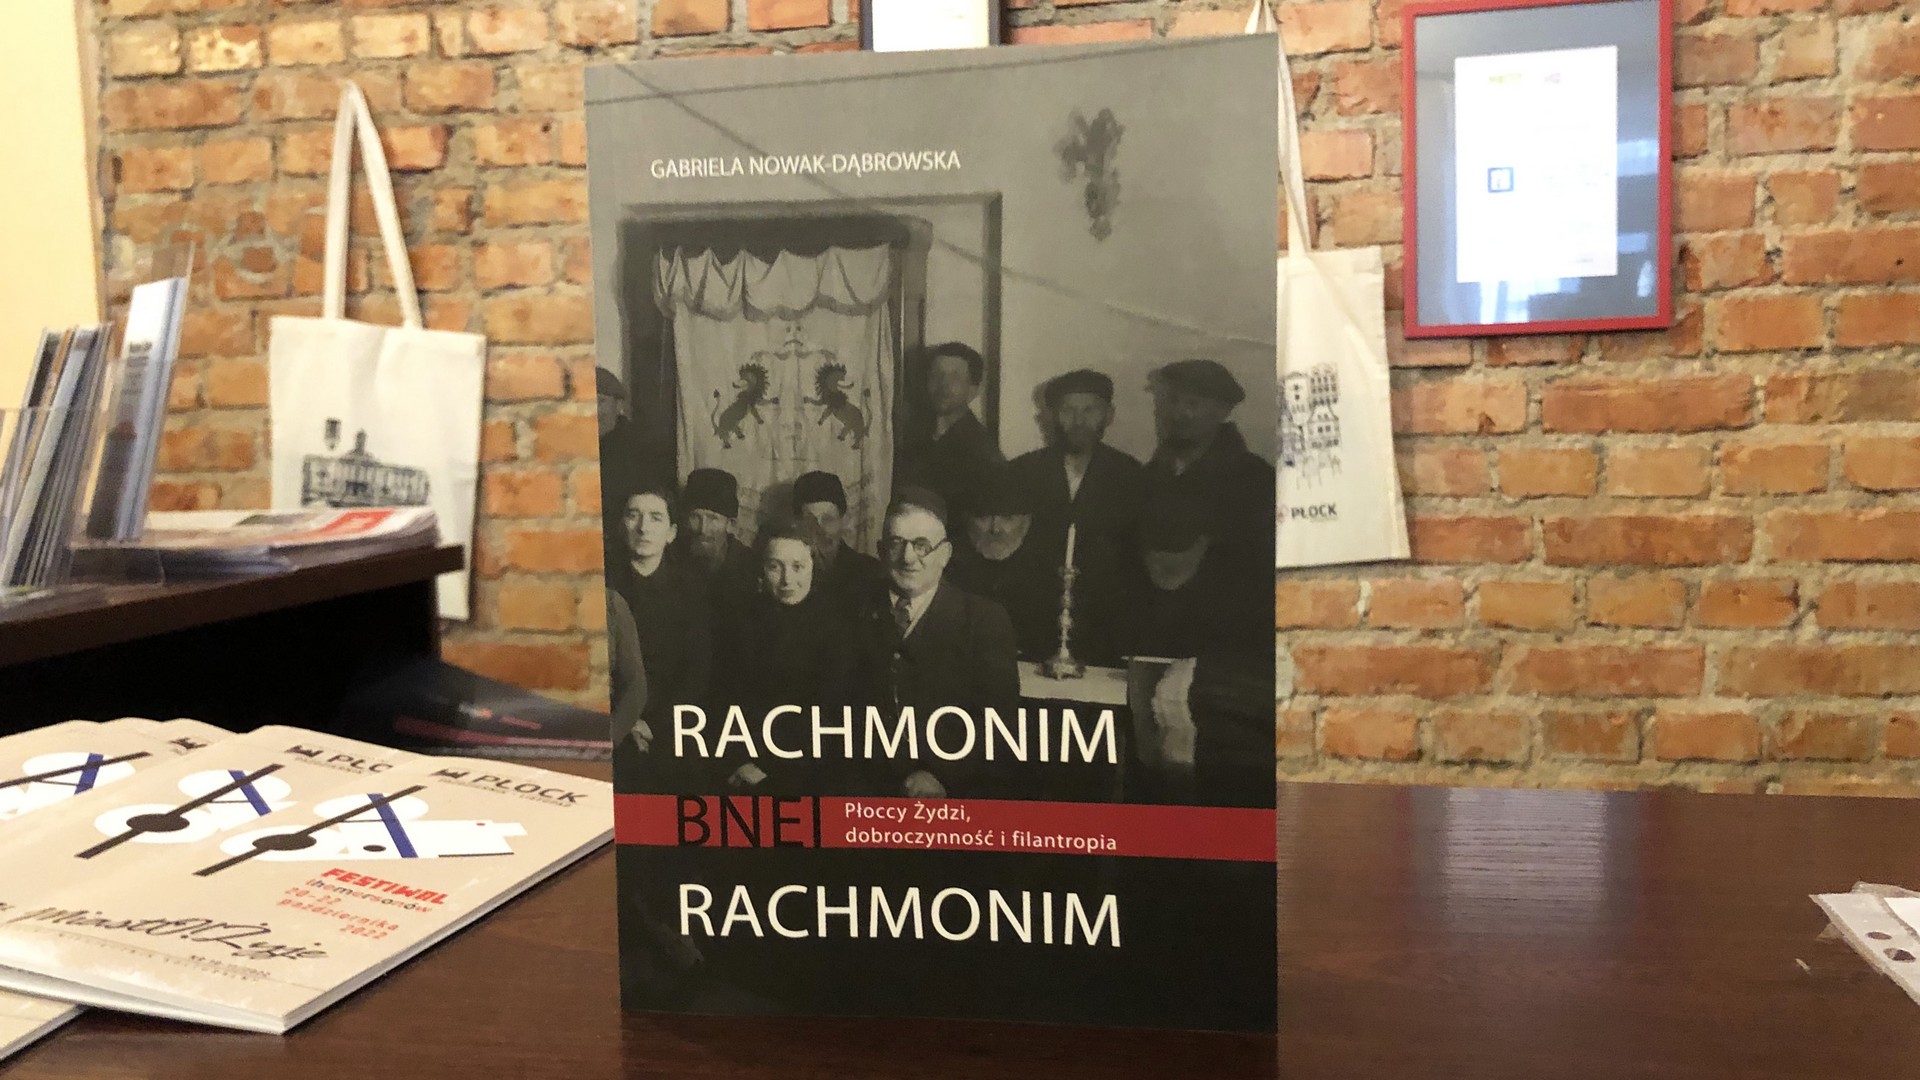 The book “Rachmonim bnei rachmonim. Charity and philanthropy of Płock Jews” available from 14 November